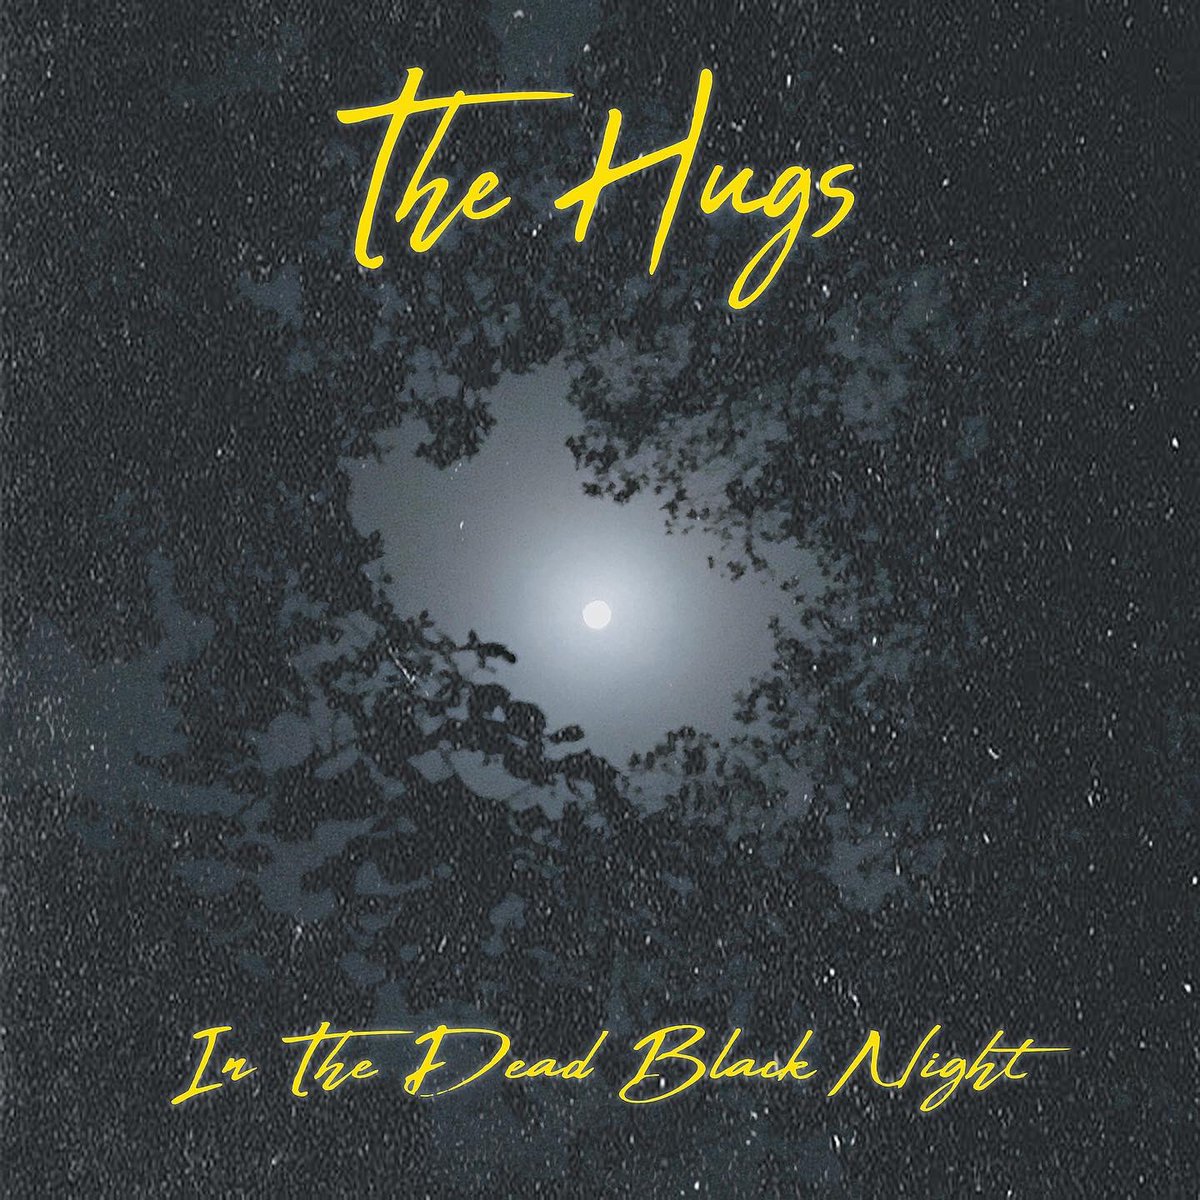 🌃📺 The Hugs new single “In The Dead Black Night” releases everywhere 5.21.2021 ♥️

#newsingle #2021music #goodtobeback #anthem 

 (📷 artwork/photo by offtrailstudios.com)